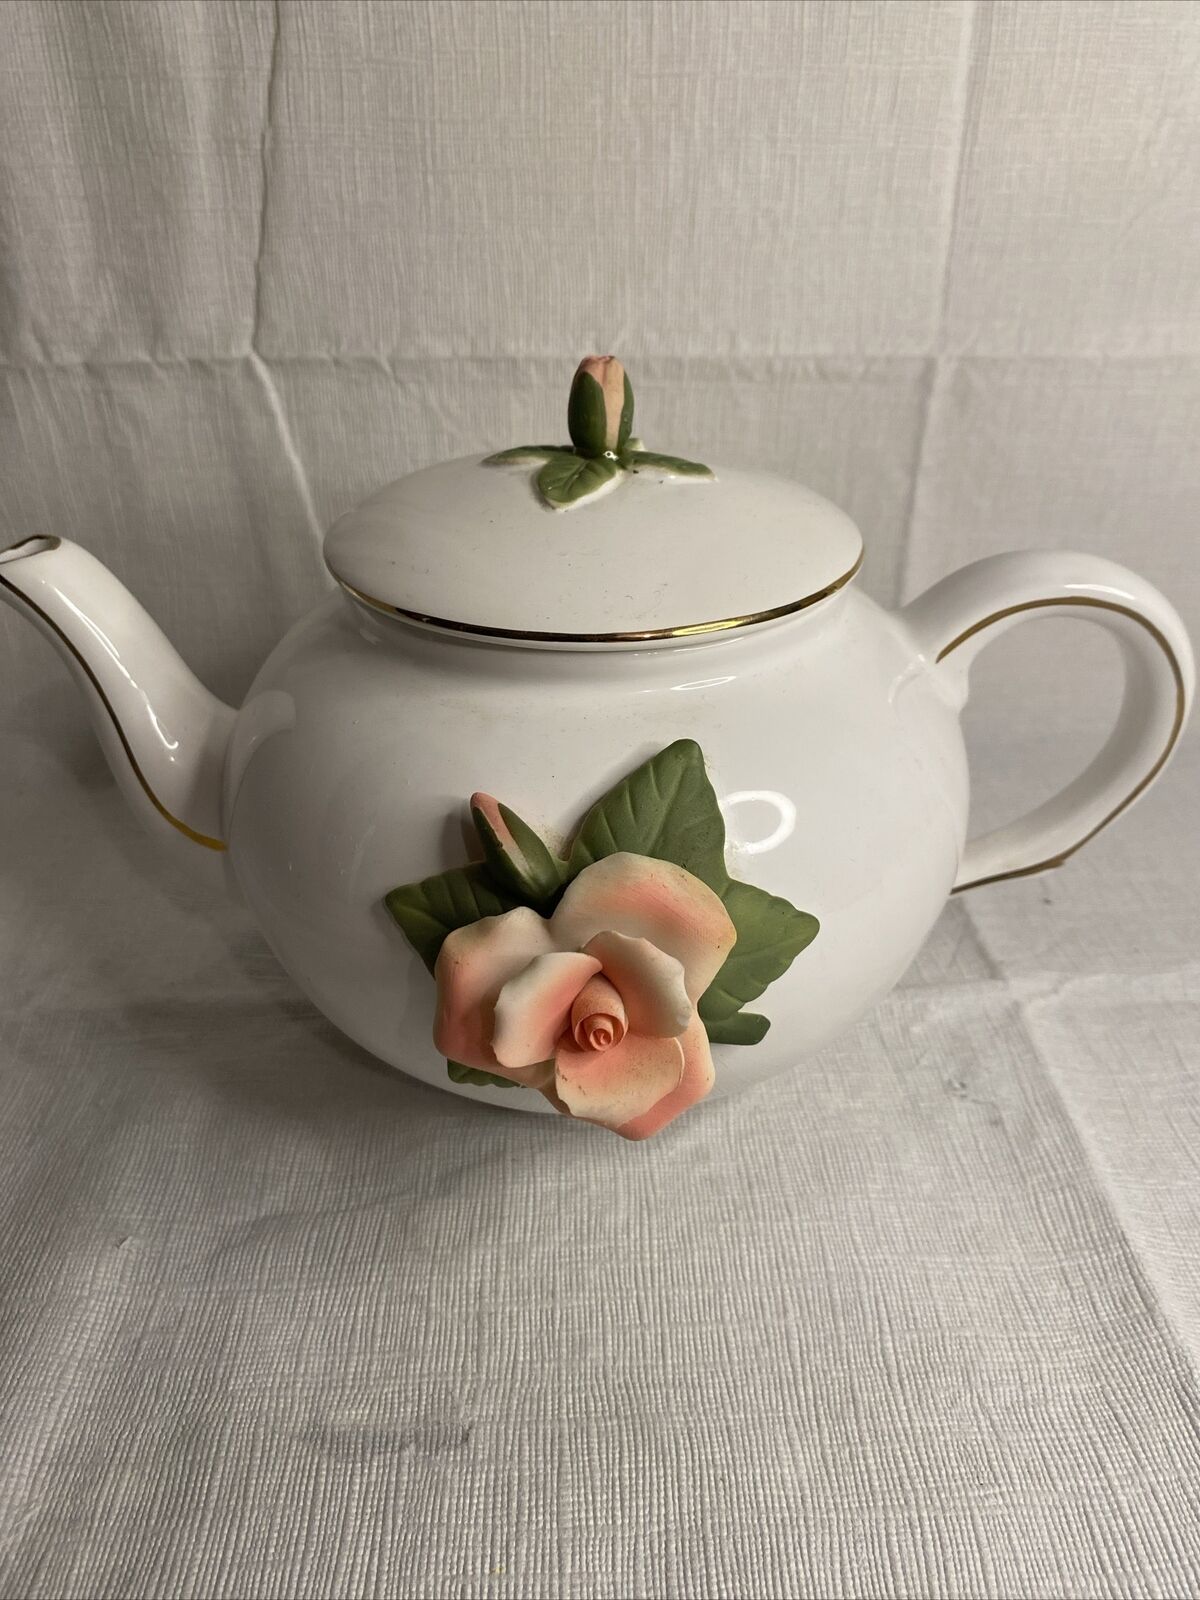 Teleflora Vintage White W/ Gold Trim Teapot with Applied Ceramic Roses 1.25 qt